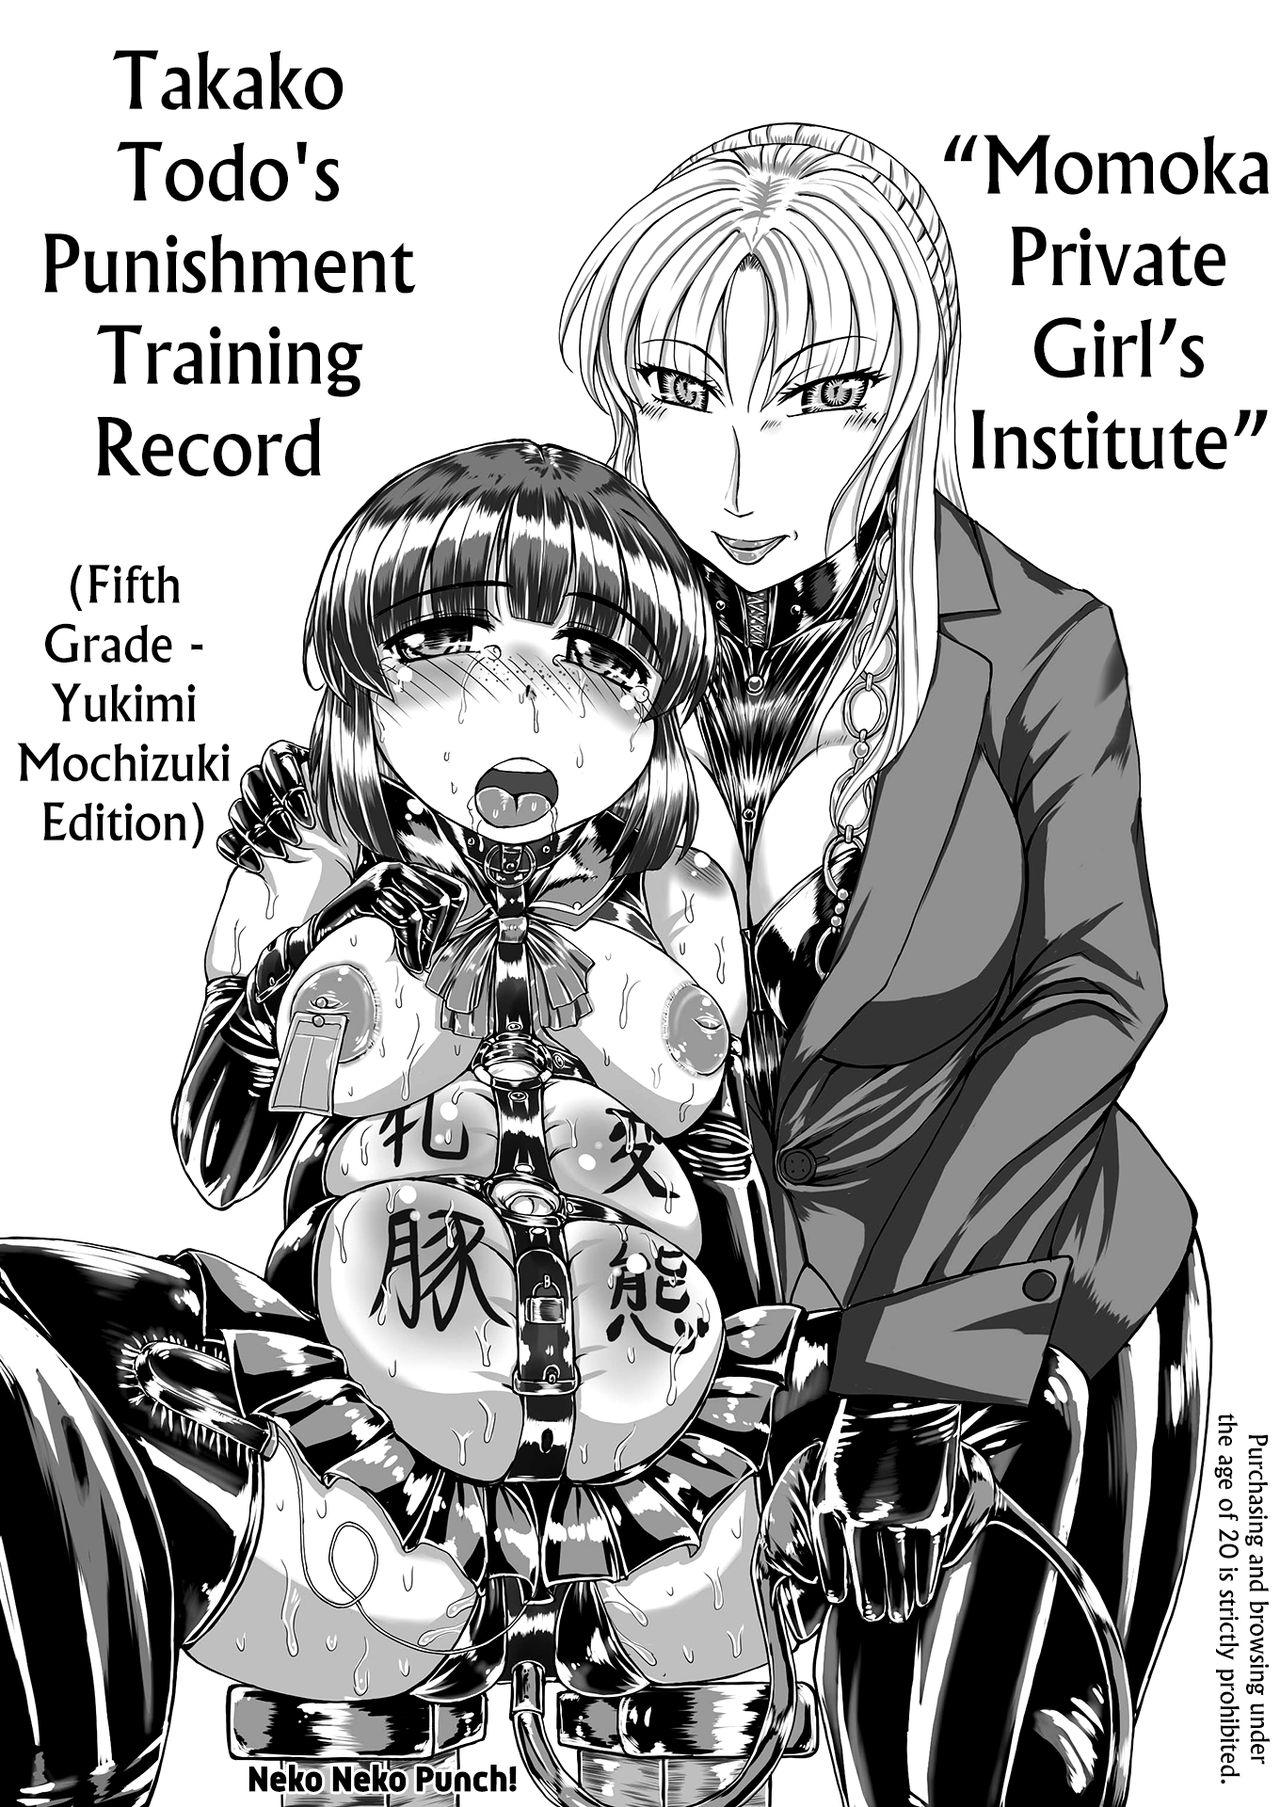 Gayemo [Neko Neko Panchu!] [Momoka Private Girls Institute] [Takako Todo's Punishment Training Record] (Fifth Grade - Yukimi Mochizuki Edition) [English] Hetero - Picture 1